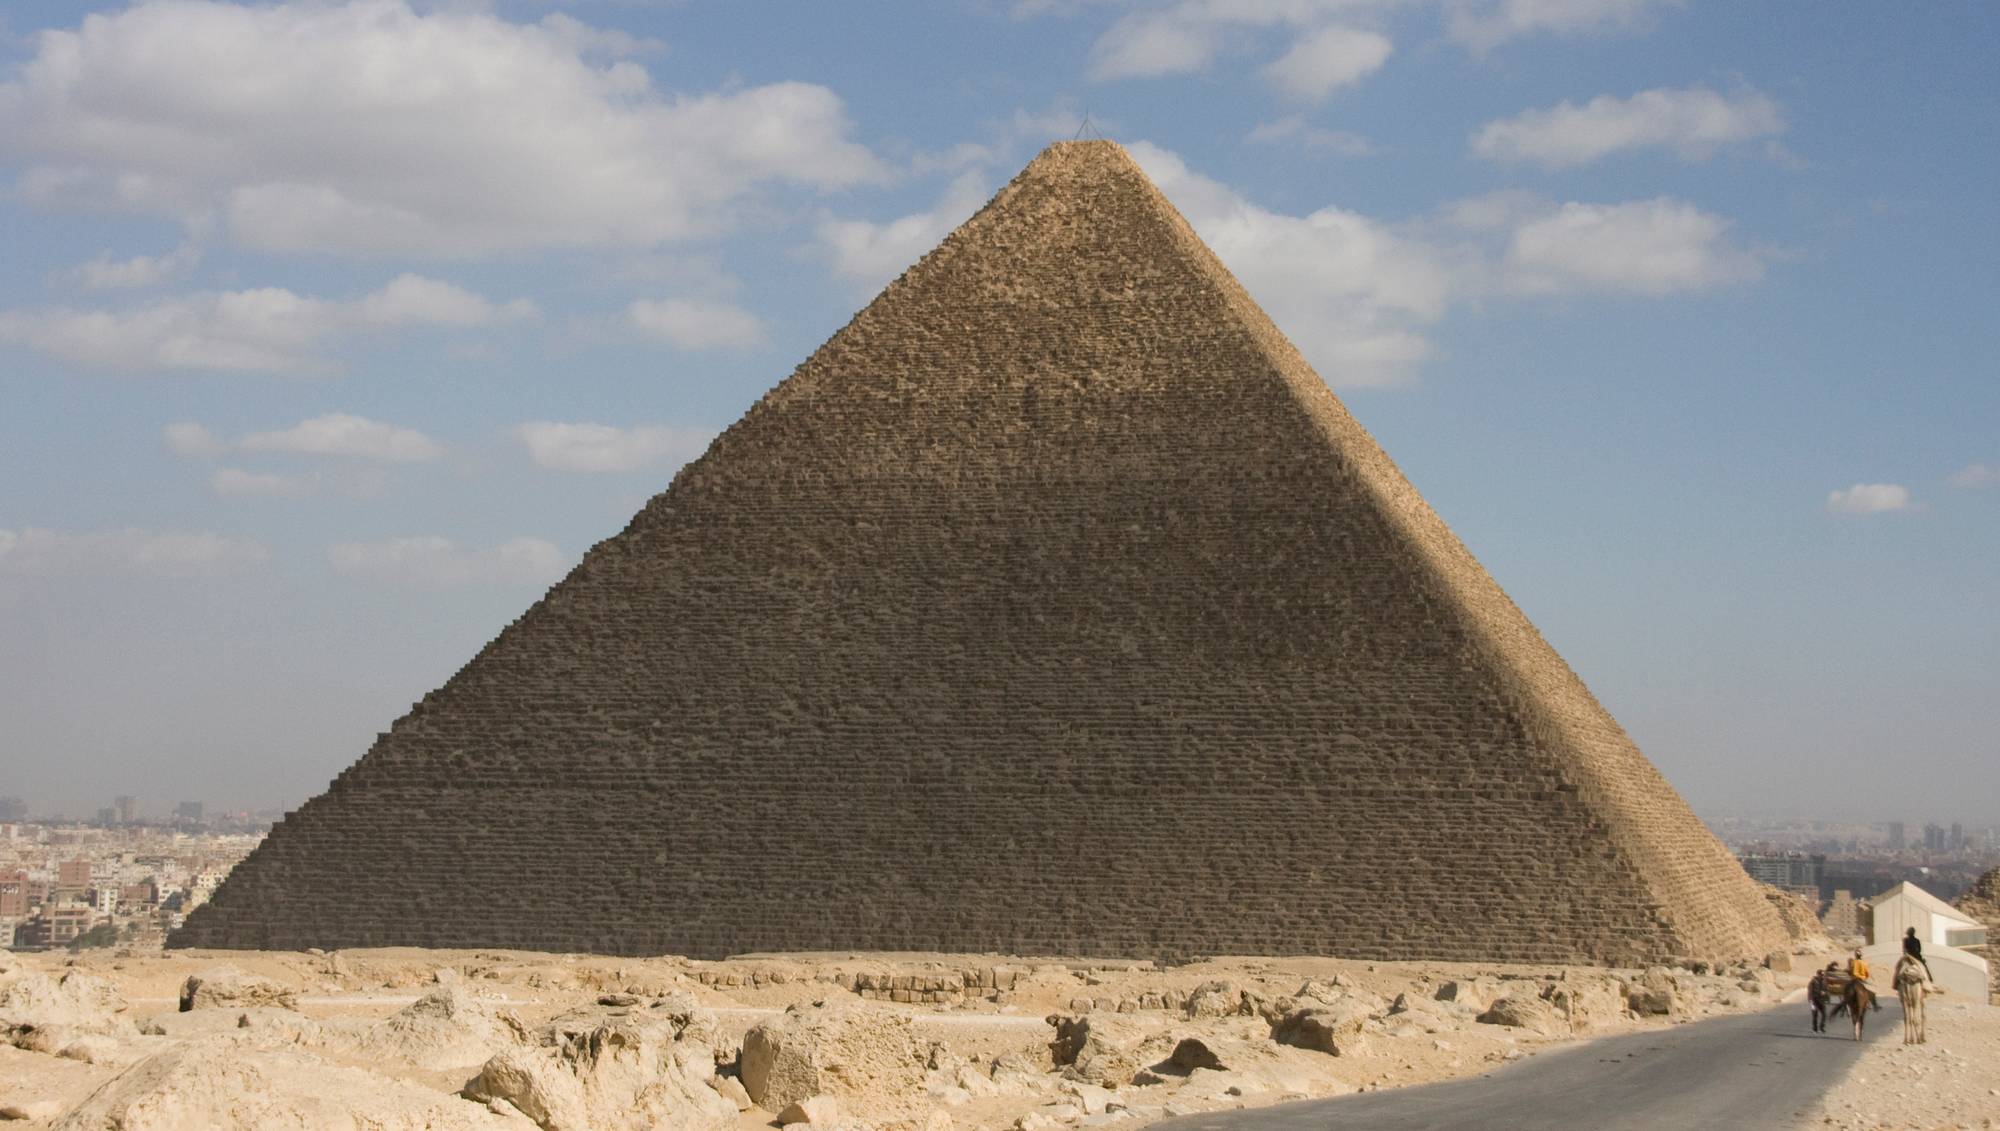 Как строили пирамиду хеопса